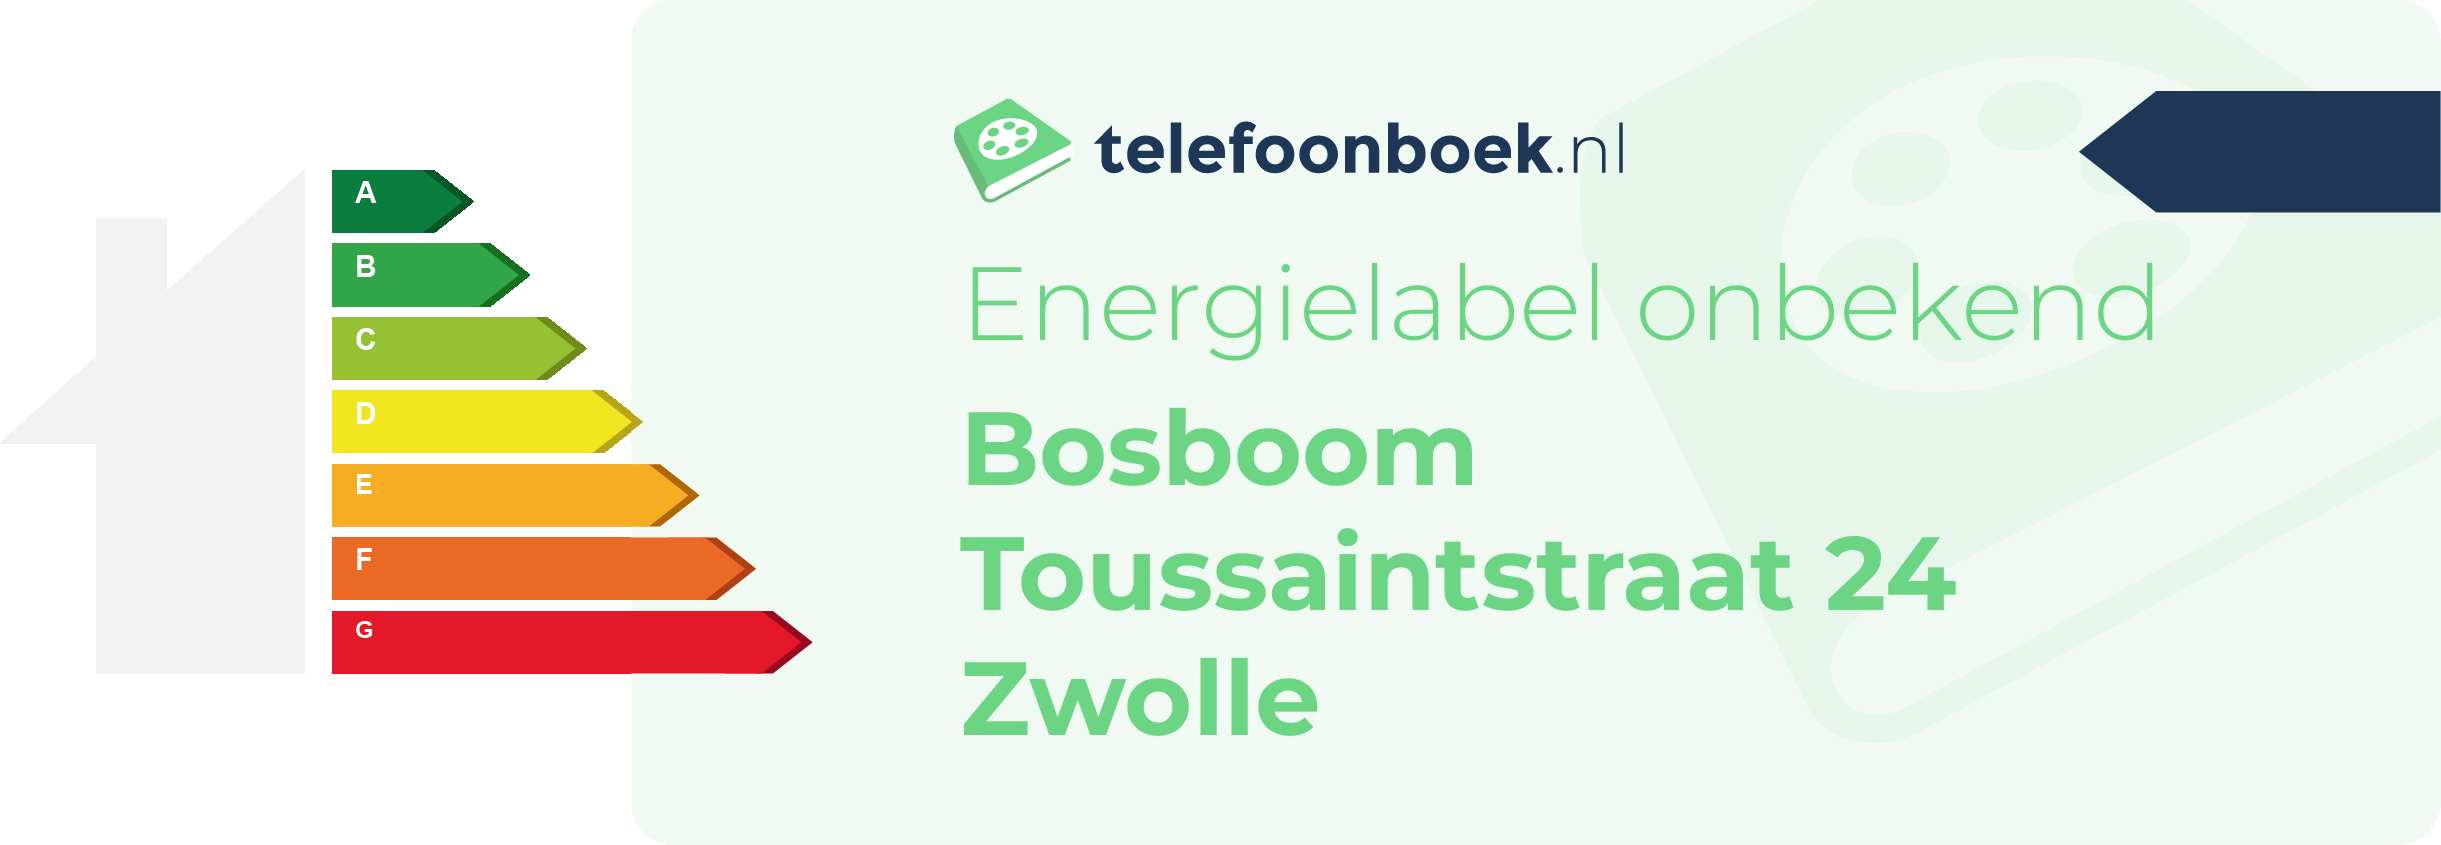 Energielabel Bosboom Toussaintstraat 24 Zwolle